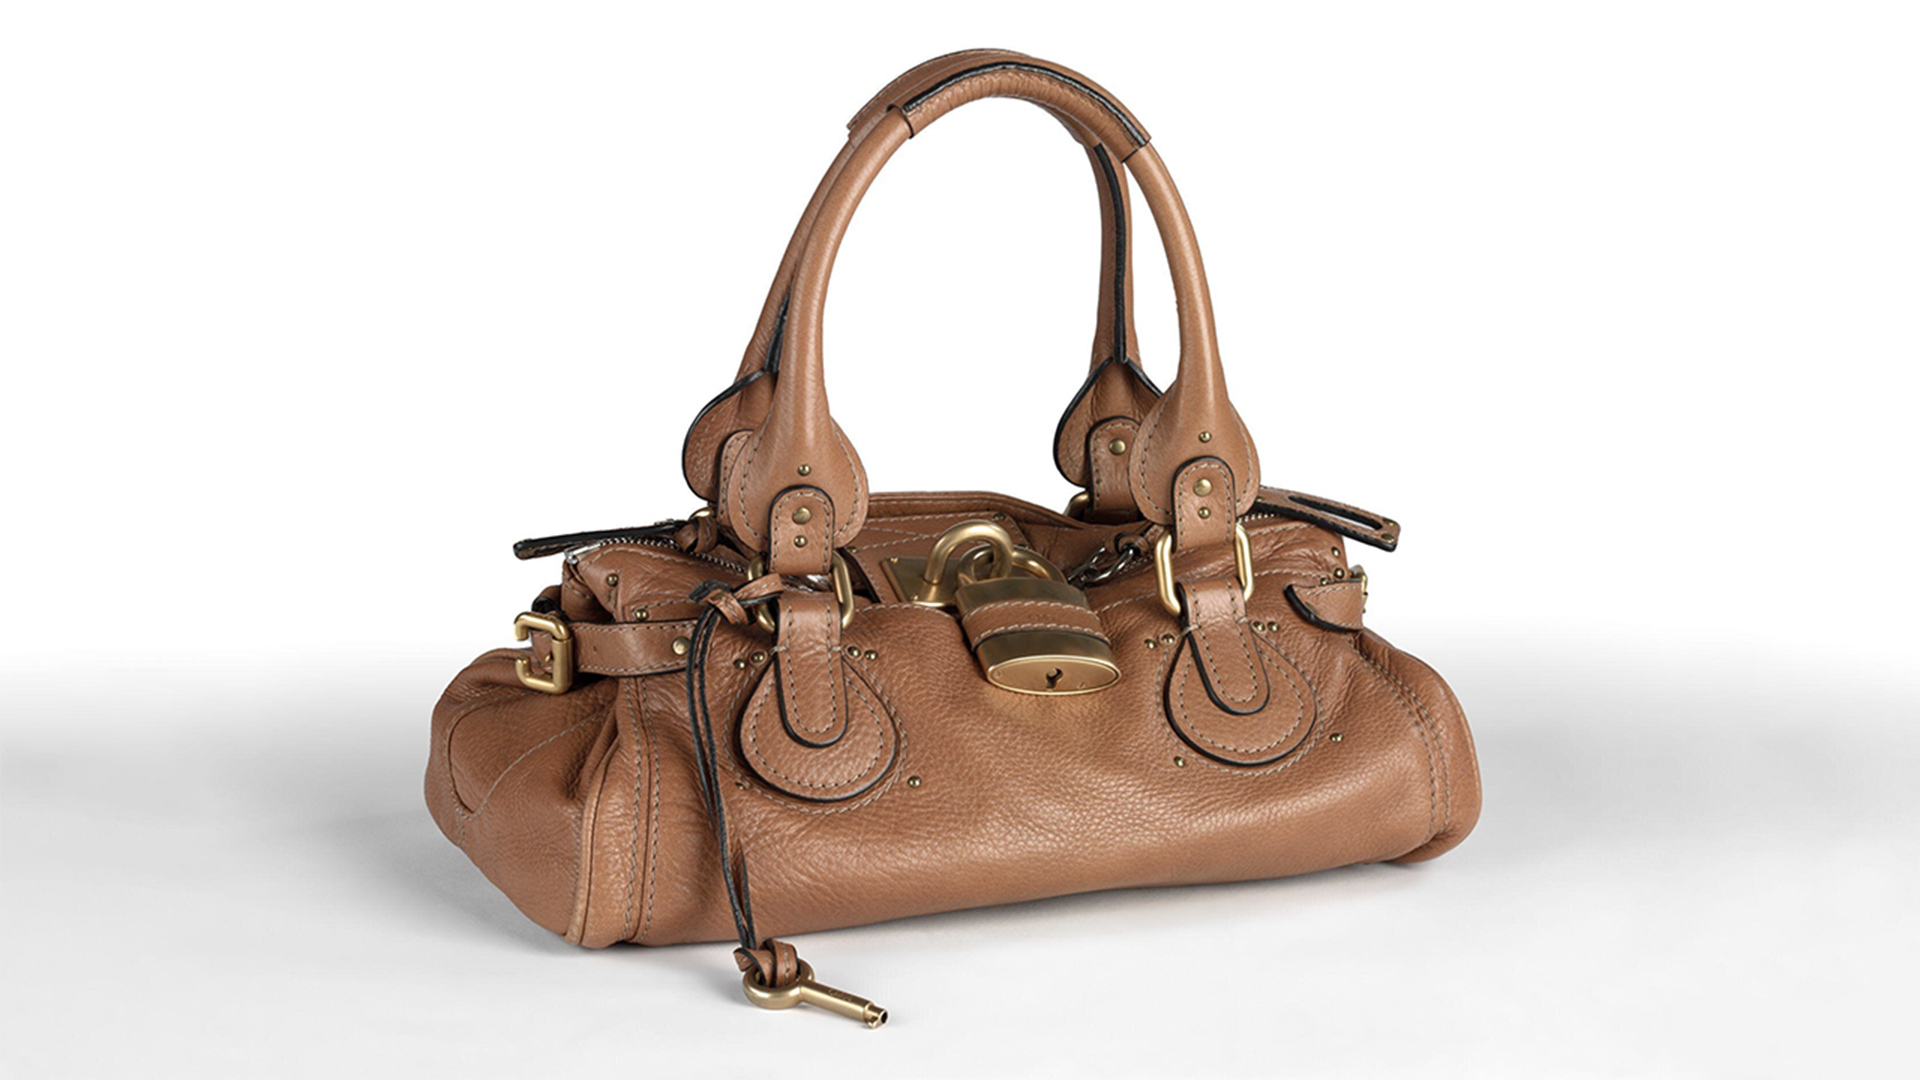 Tan leather handbag